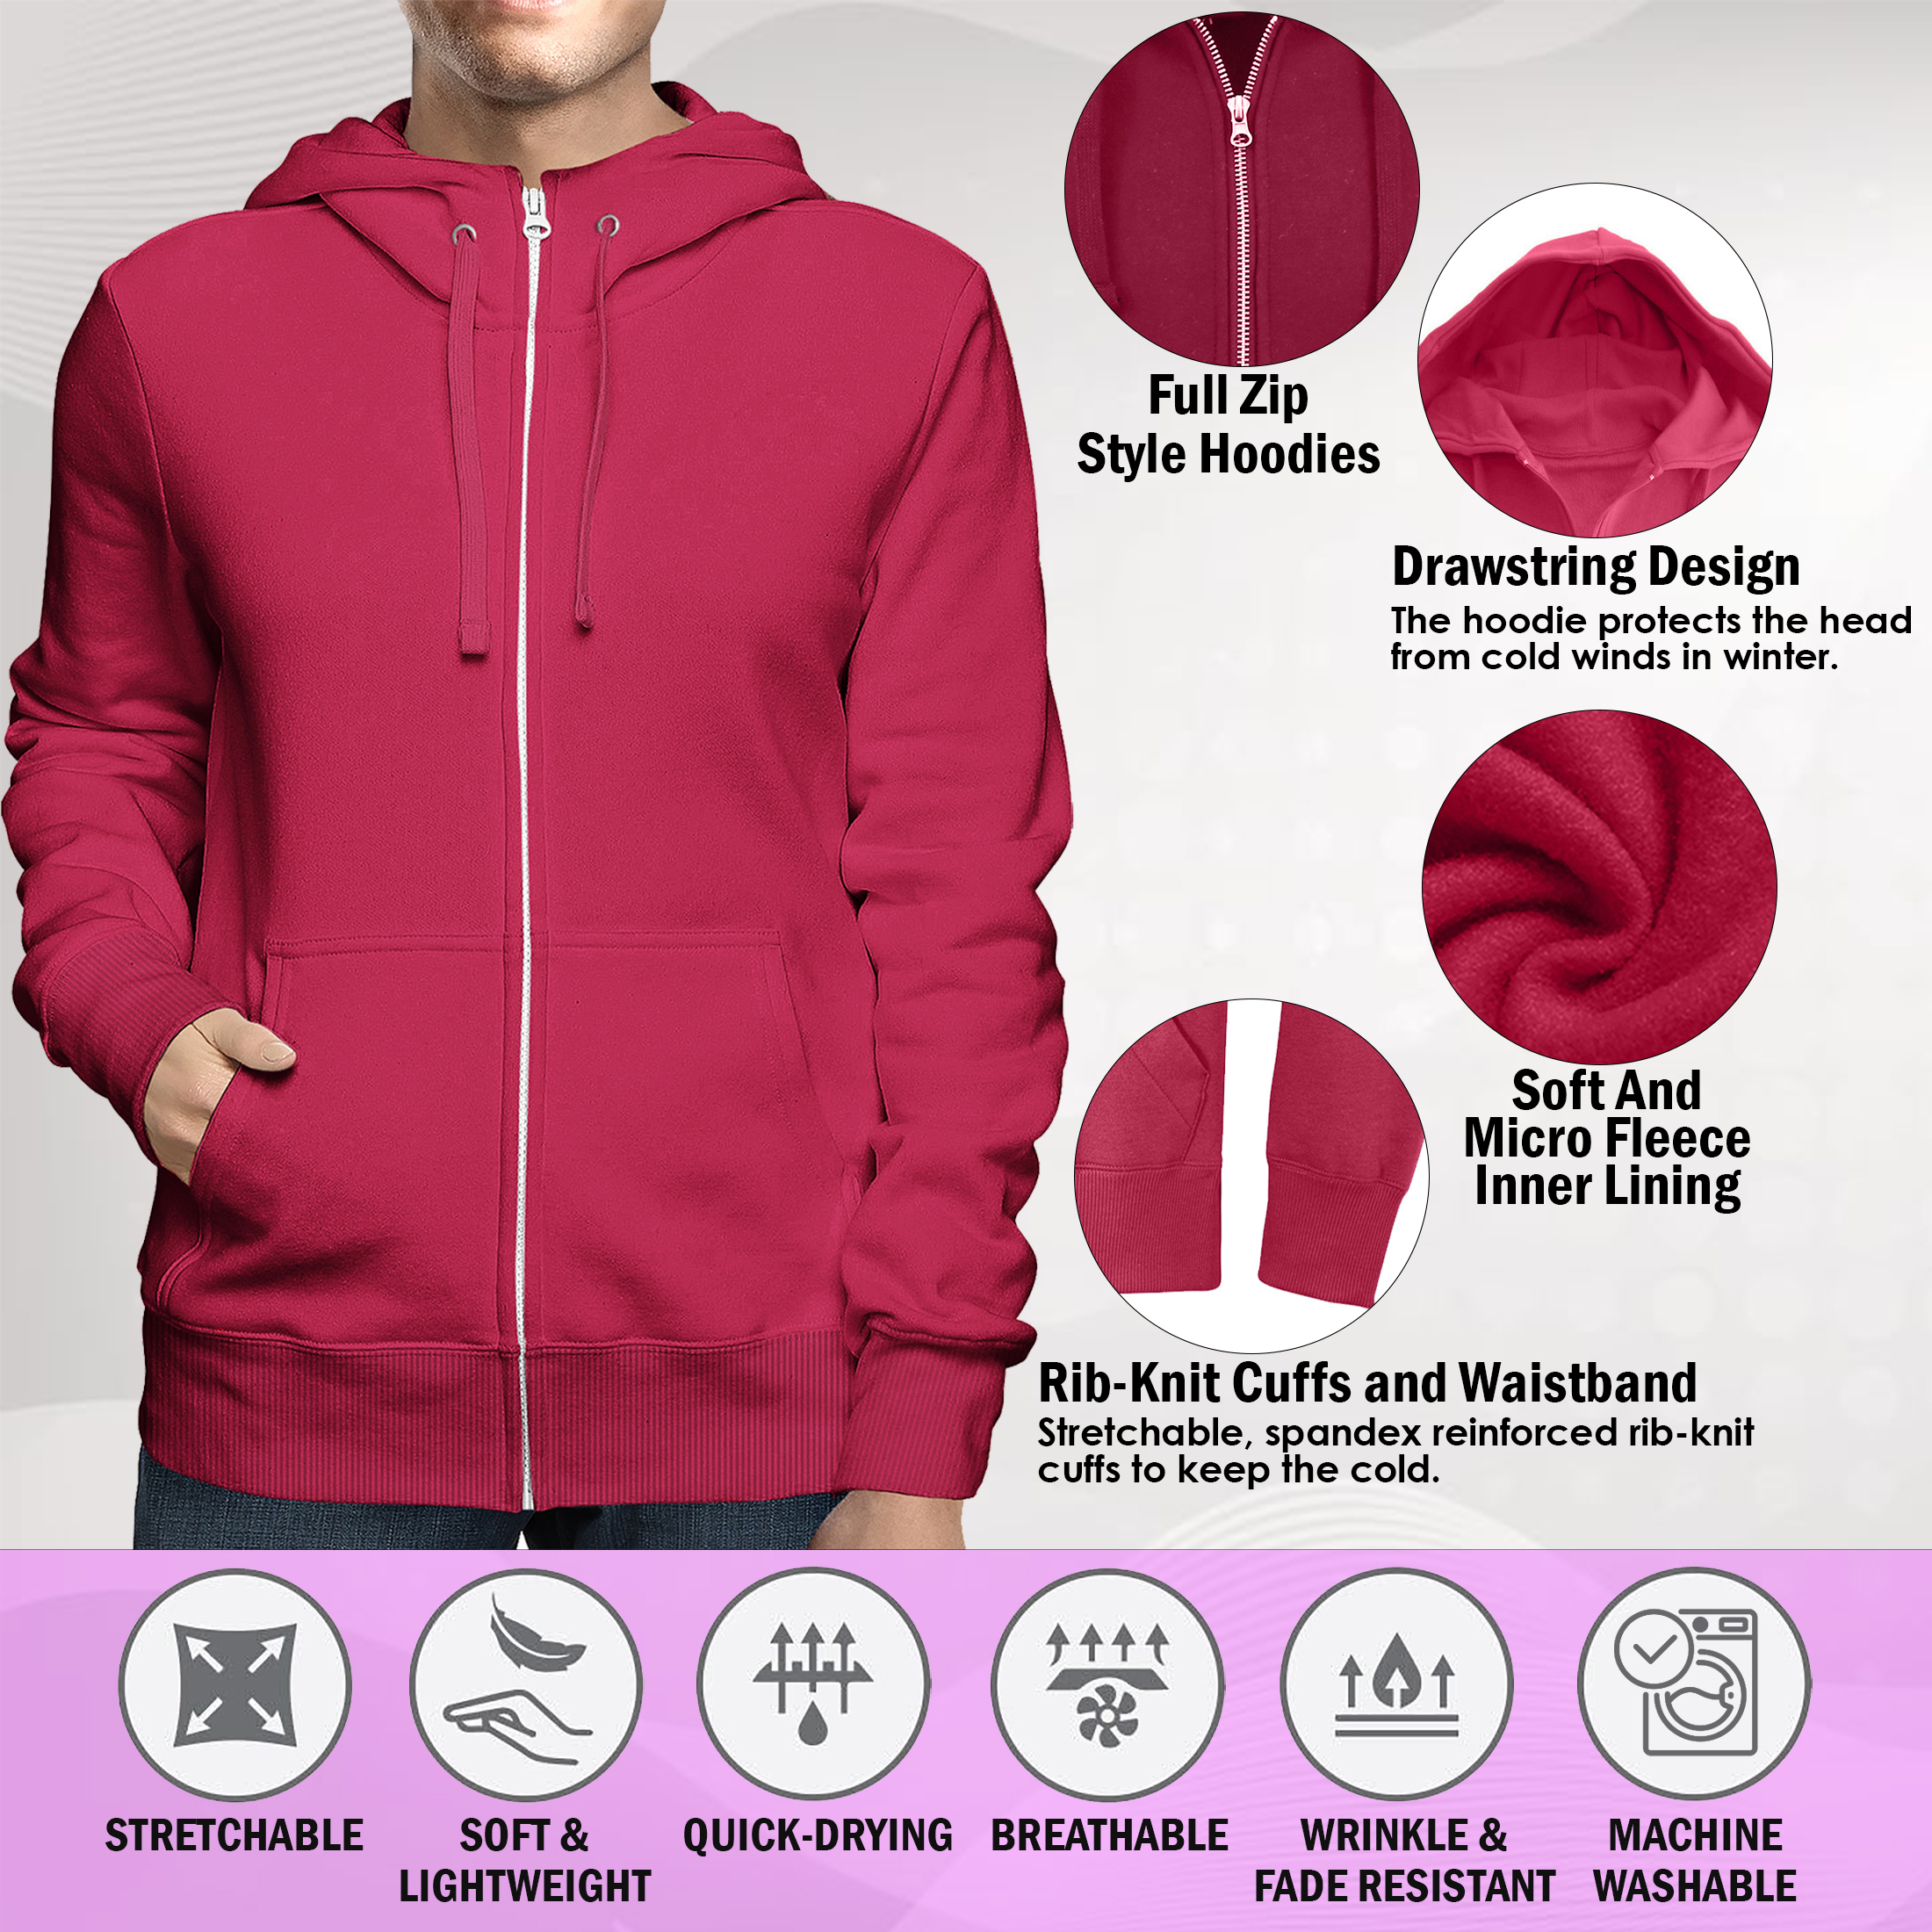 2-Pack: Men's Full Zip Up Fleece-Lined Hoodie Sweatshirt (Big & Tall Size Available) - Charcoal & Gray, Medium